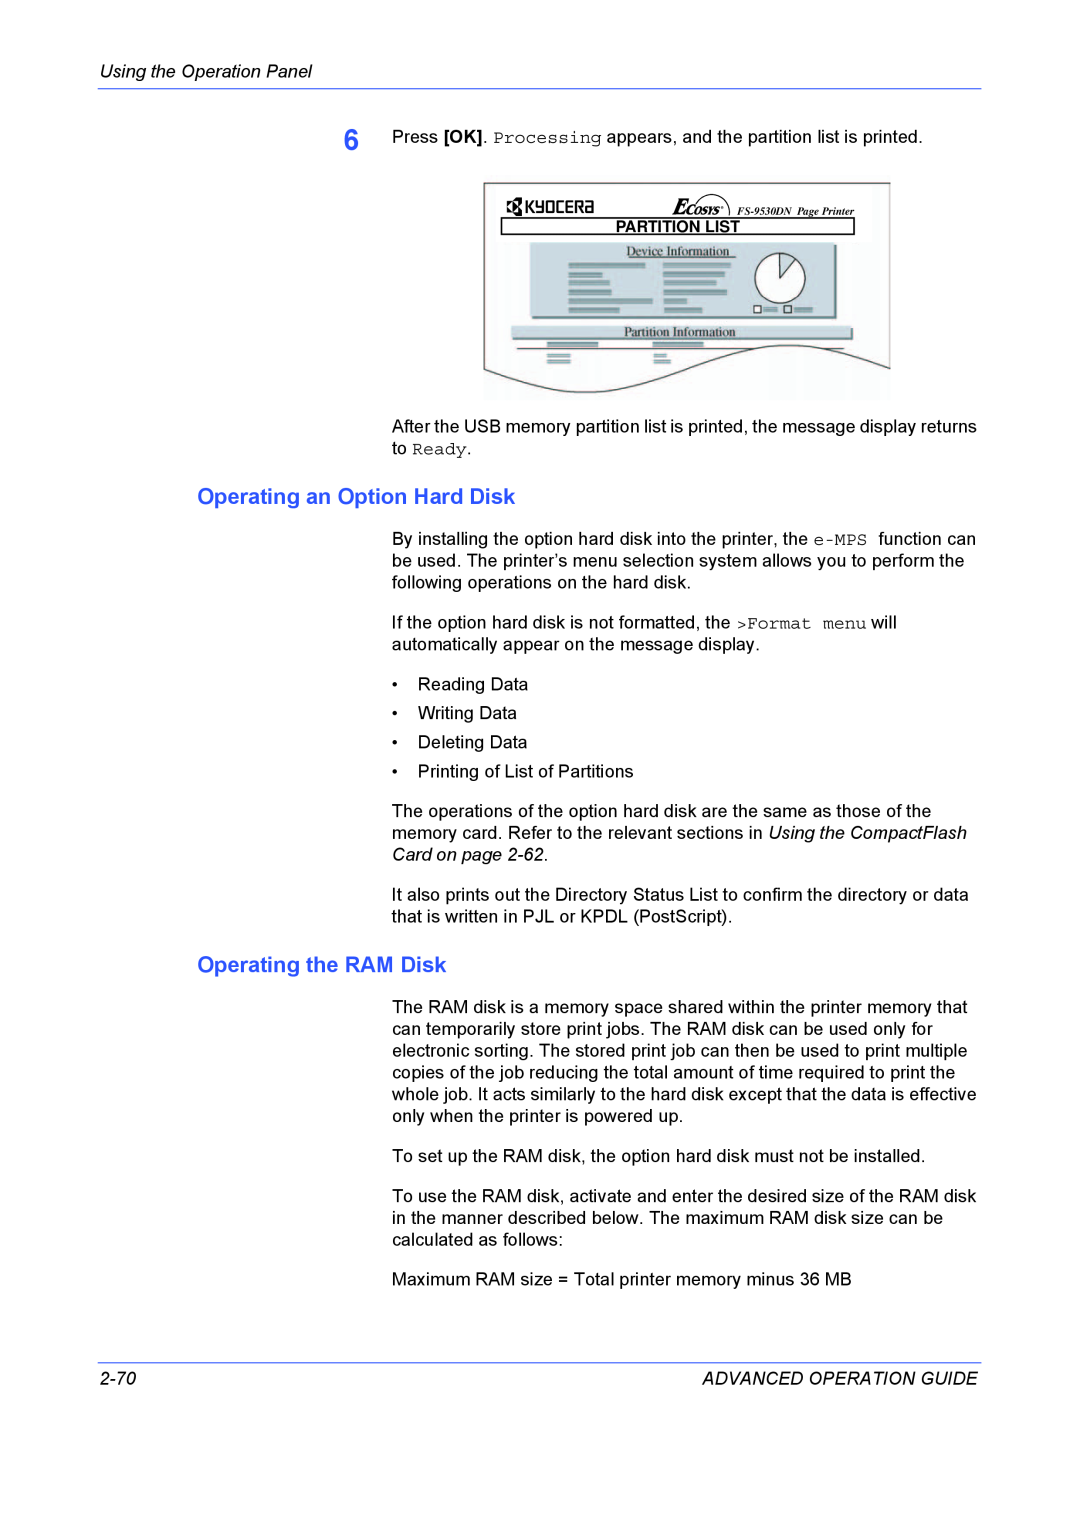 Kyocera 9530DN manual Operating an Option Hard Disk, Operating the RAM Disk 